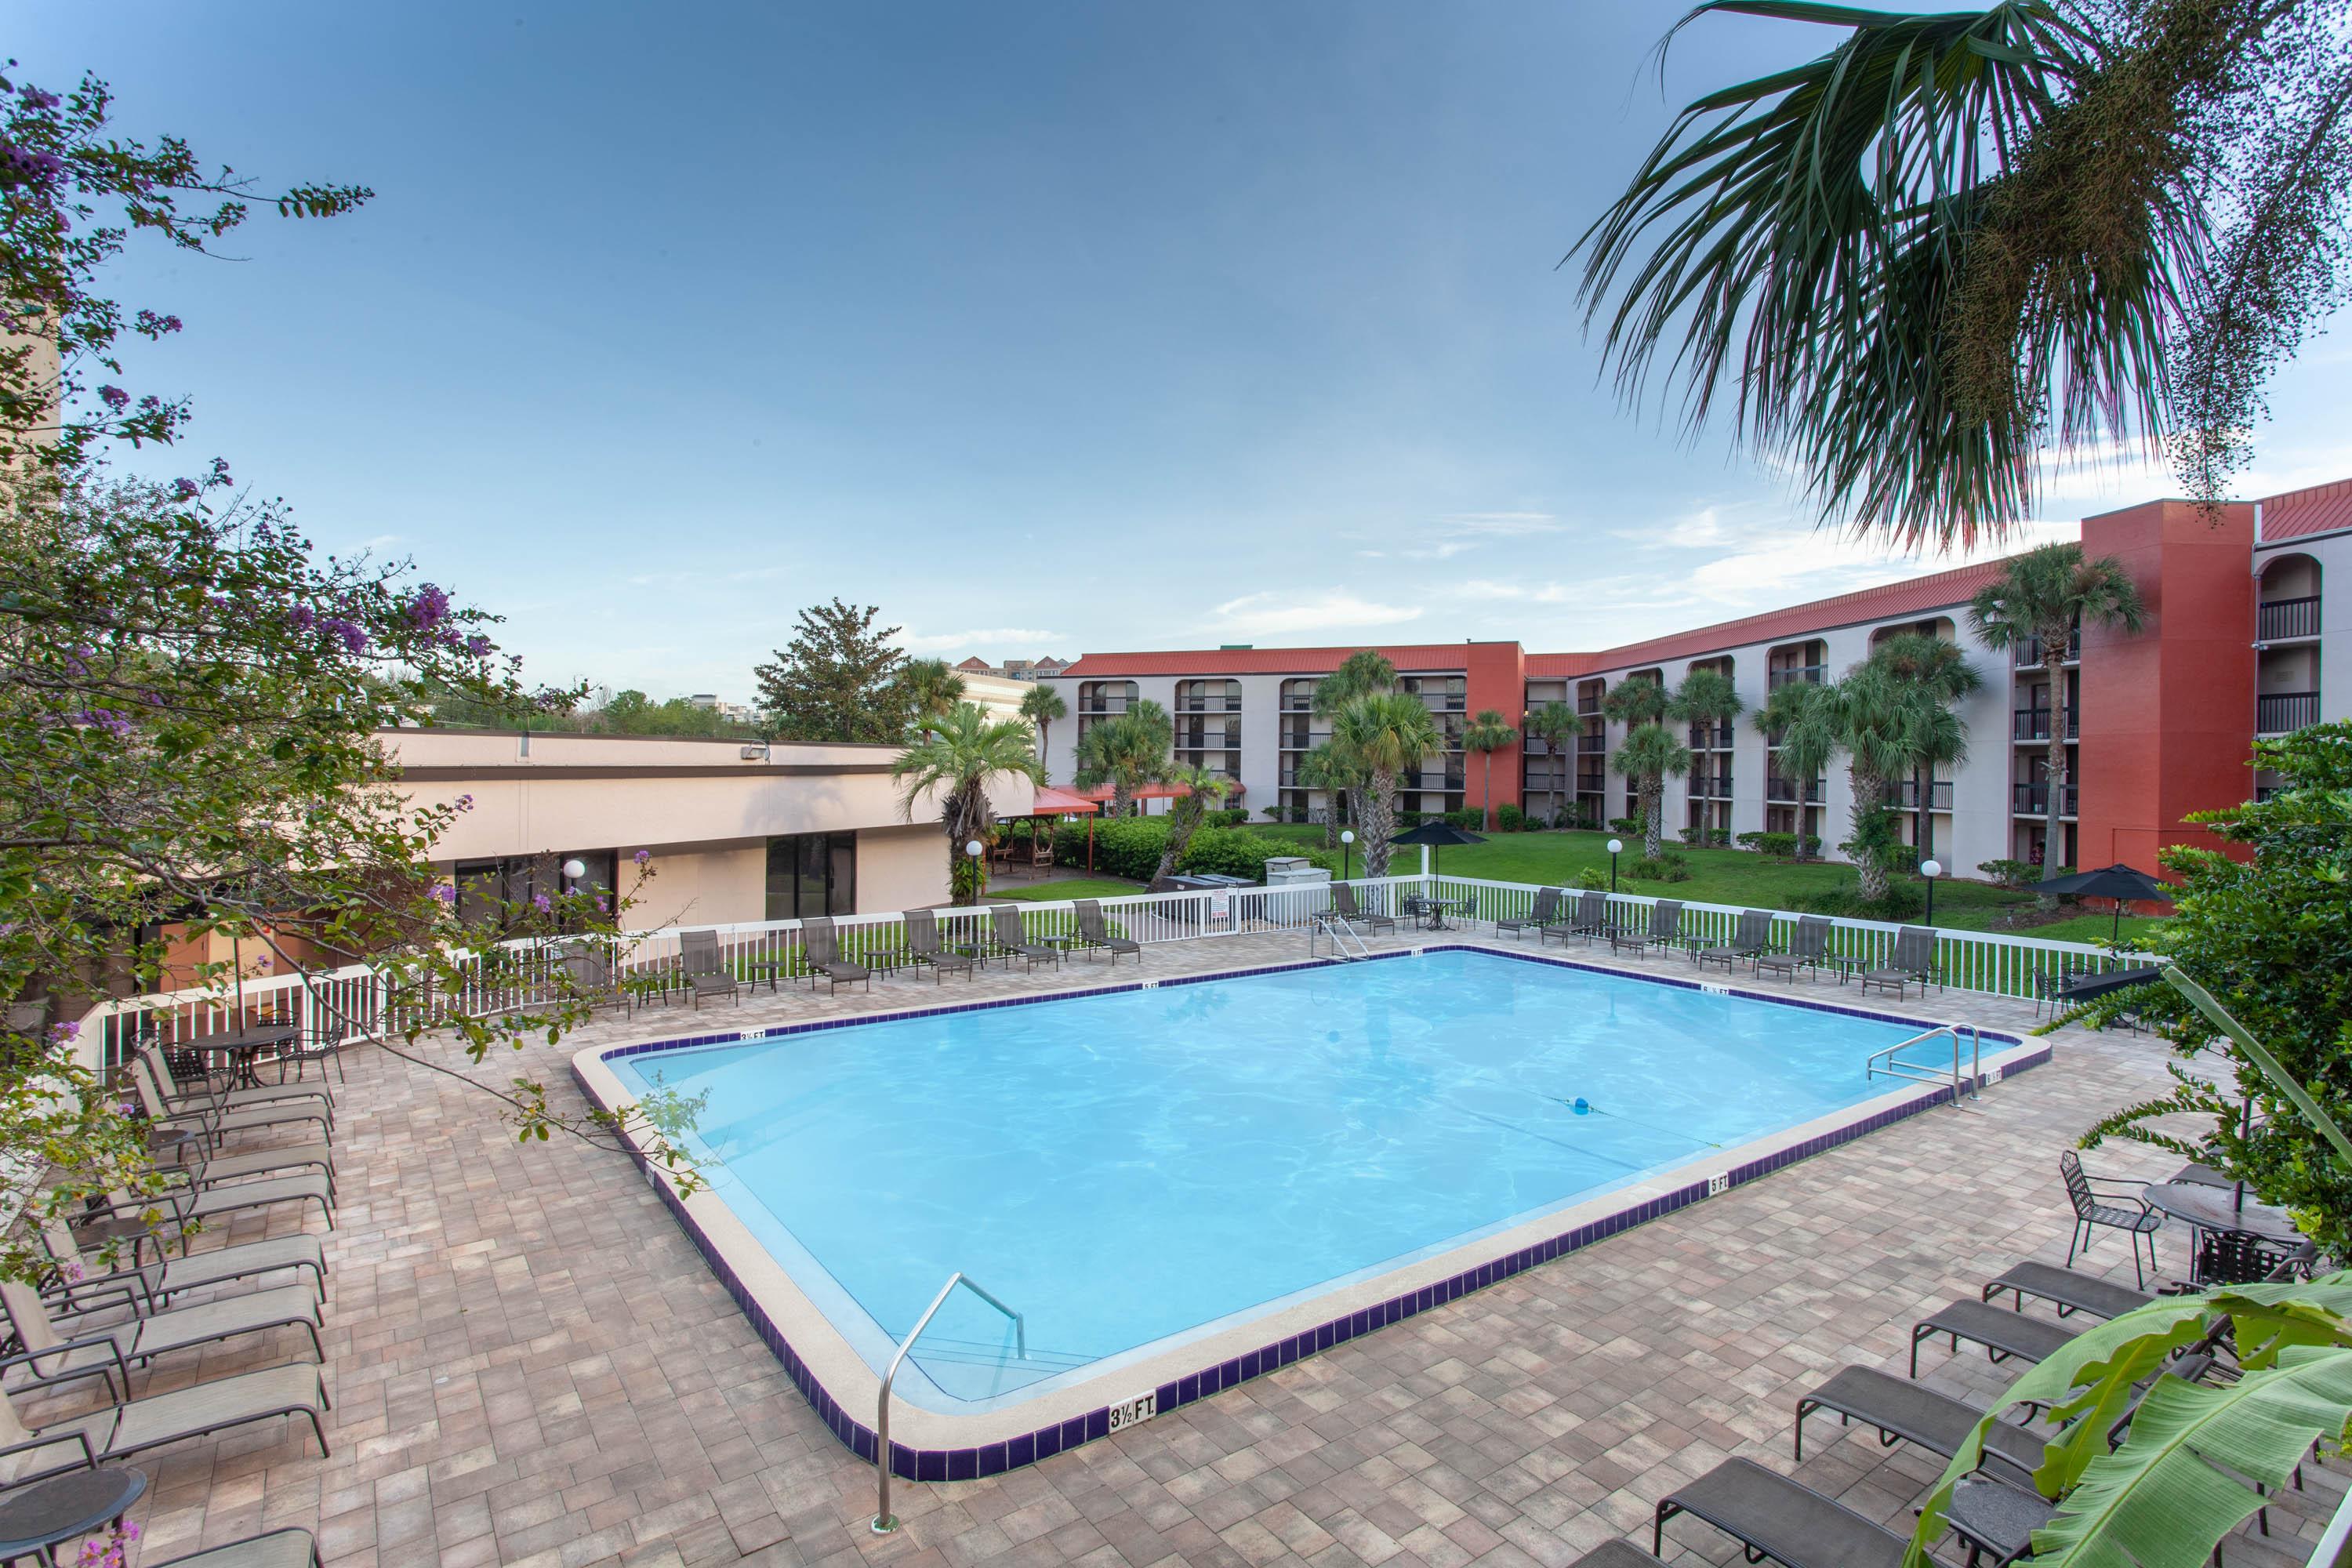 GRAND HOTEL ORLANDO AT UNIVERSAL BLVD ORLANDO, FL 3* (United States) - from  £ 57 | HOTELMIX